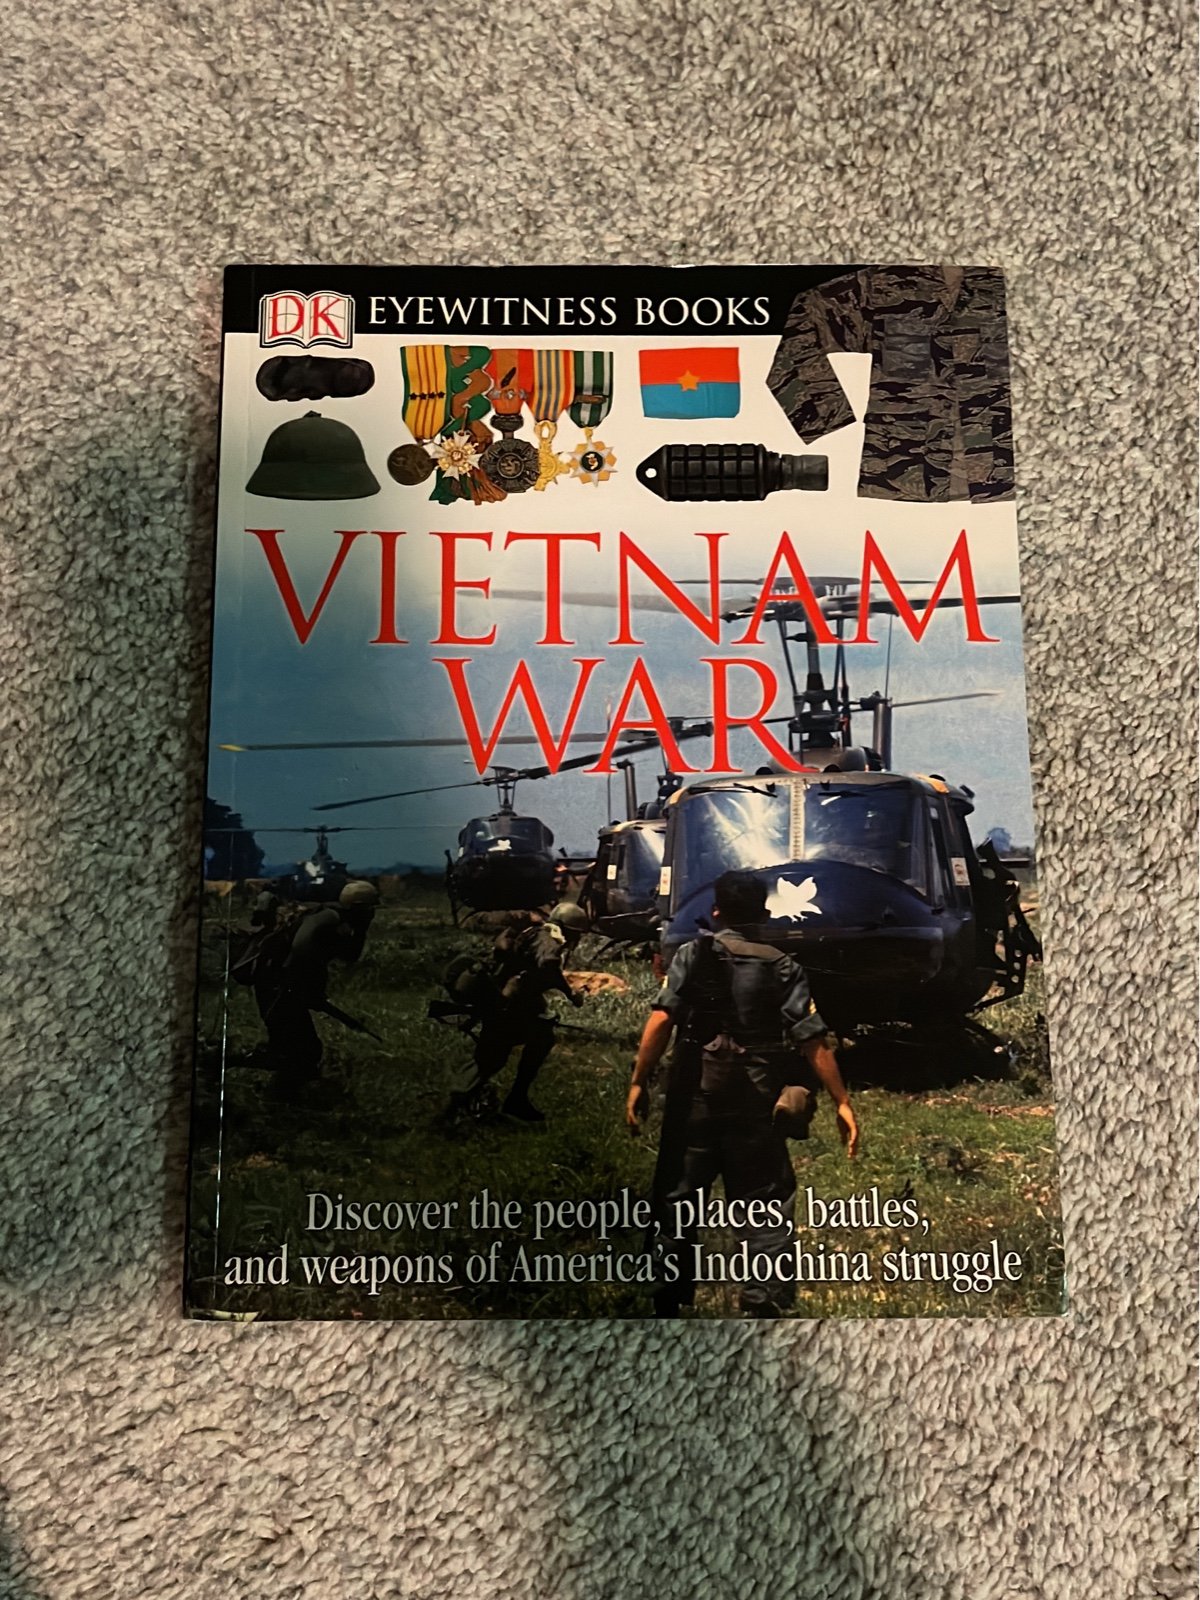 DK eyewitness books Vietnam war qg9KwXRI3